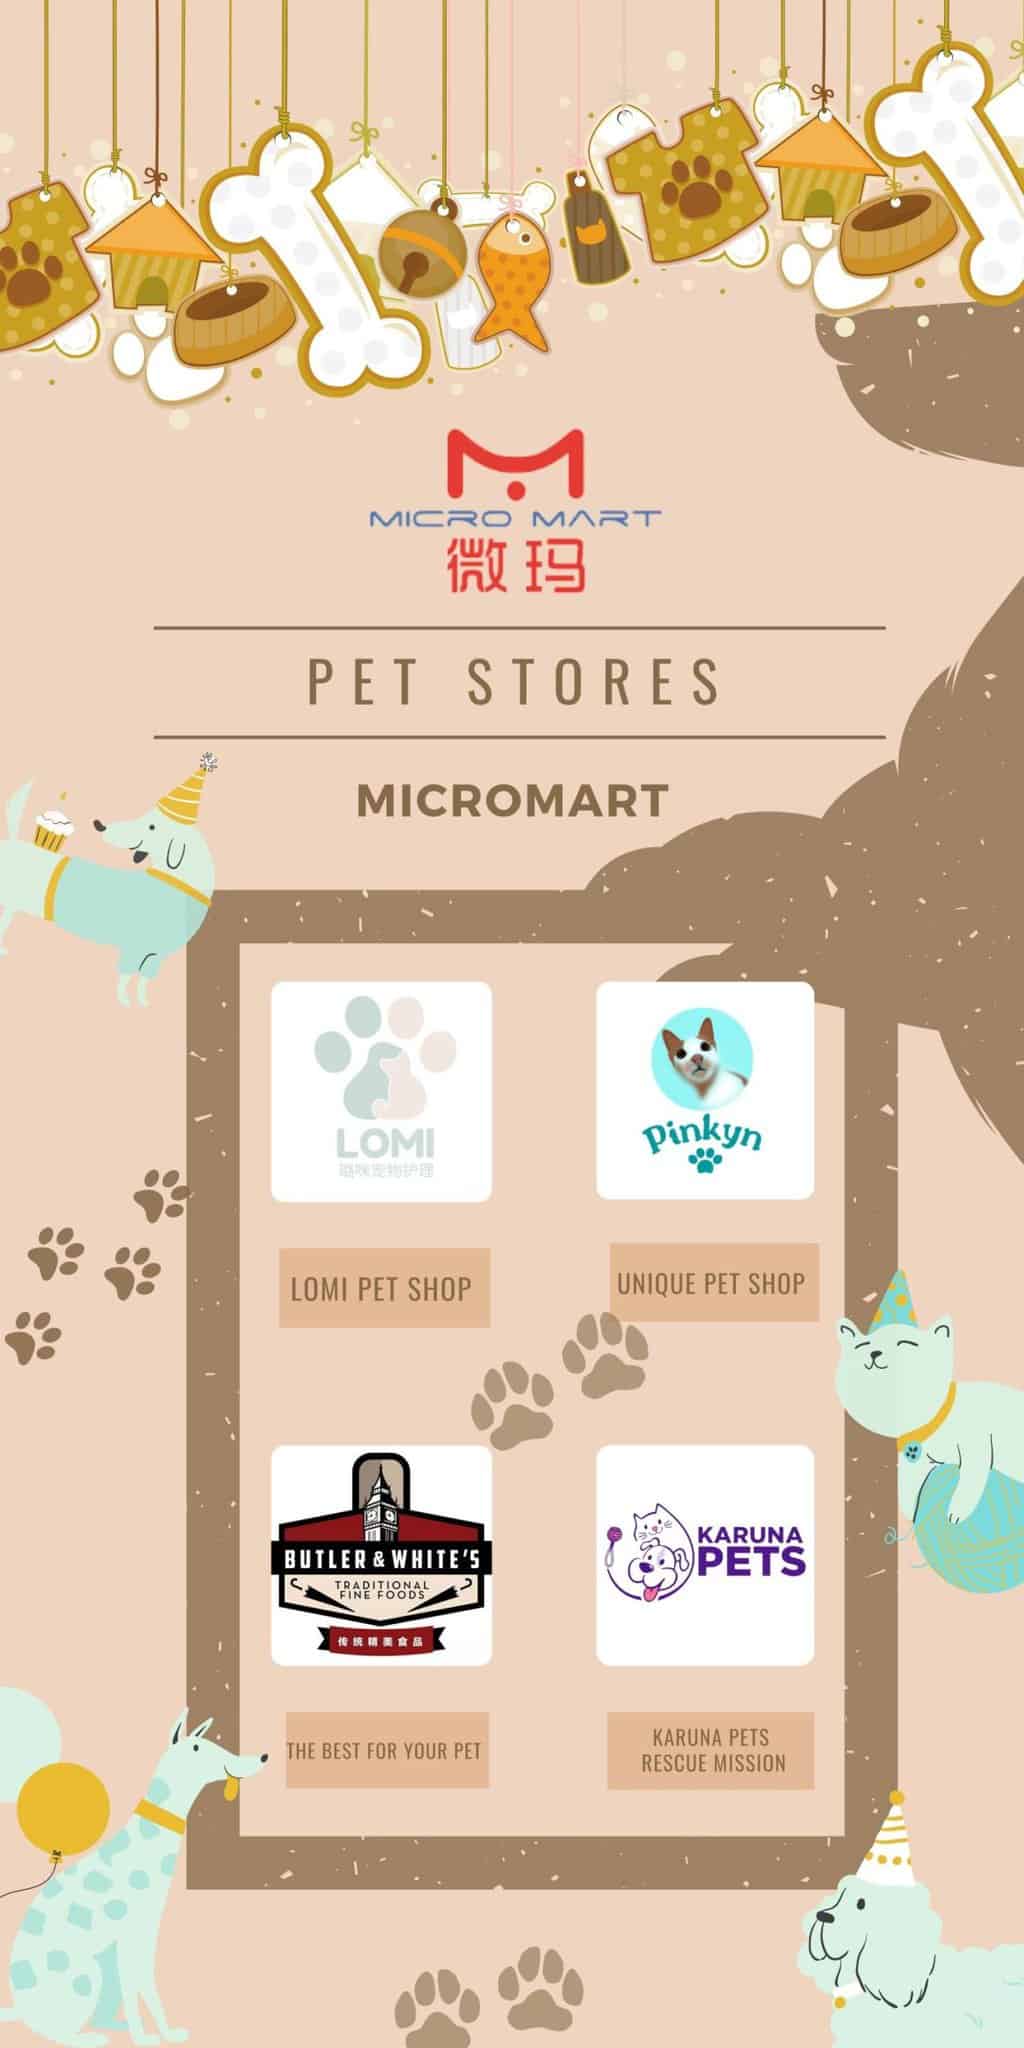 Micromart - Pet Stores